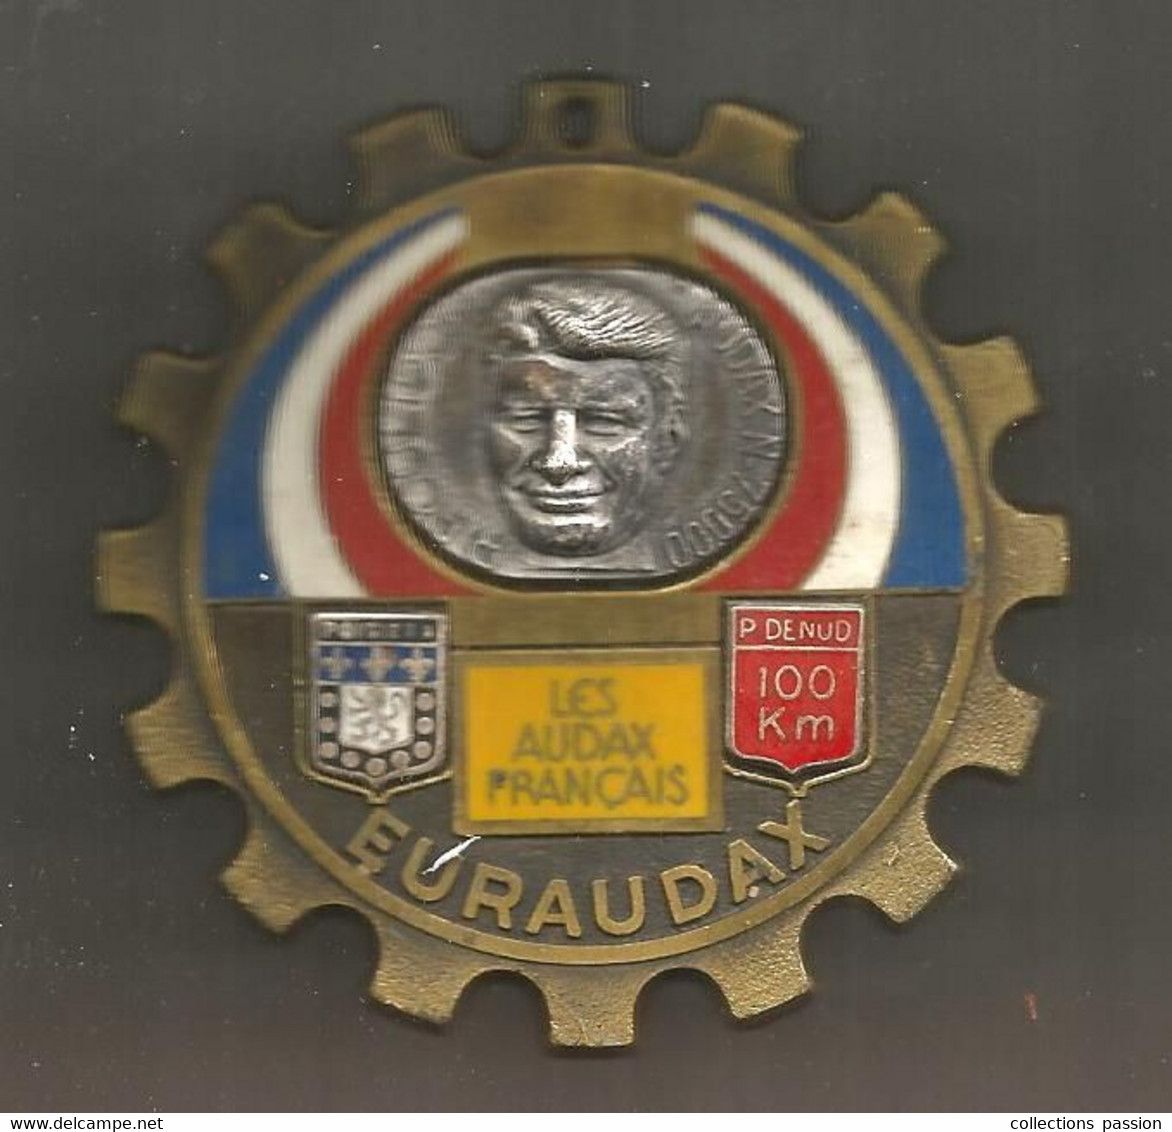 Médaille , Sports , Cyclisme, EURAUDAX , Les AUDAX FRANCAIS, R. Poulidor , 1979 , 72 Gr. , Frais Fr 3.35 - Cycling